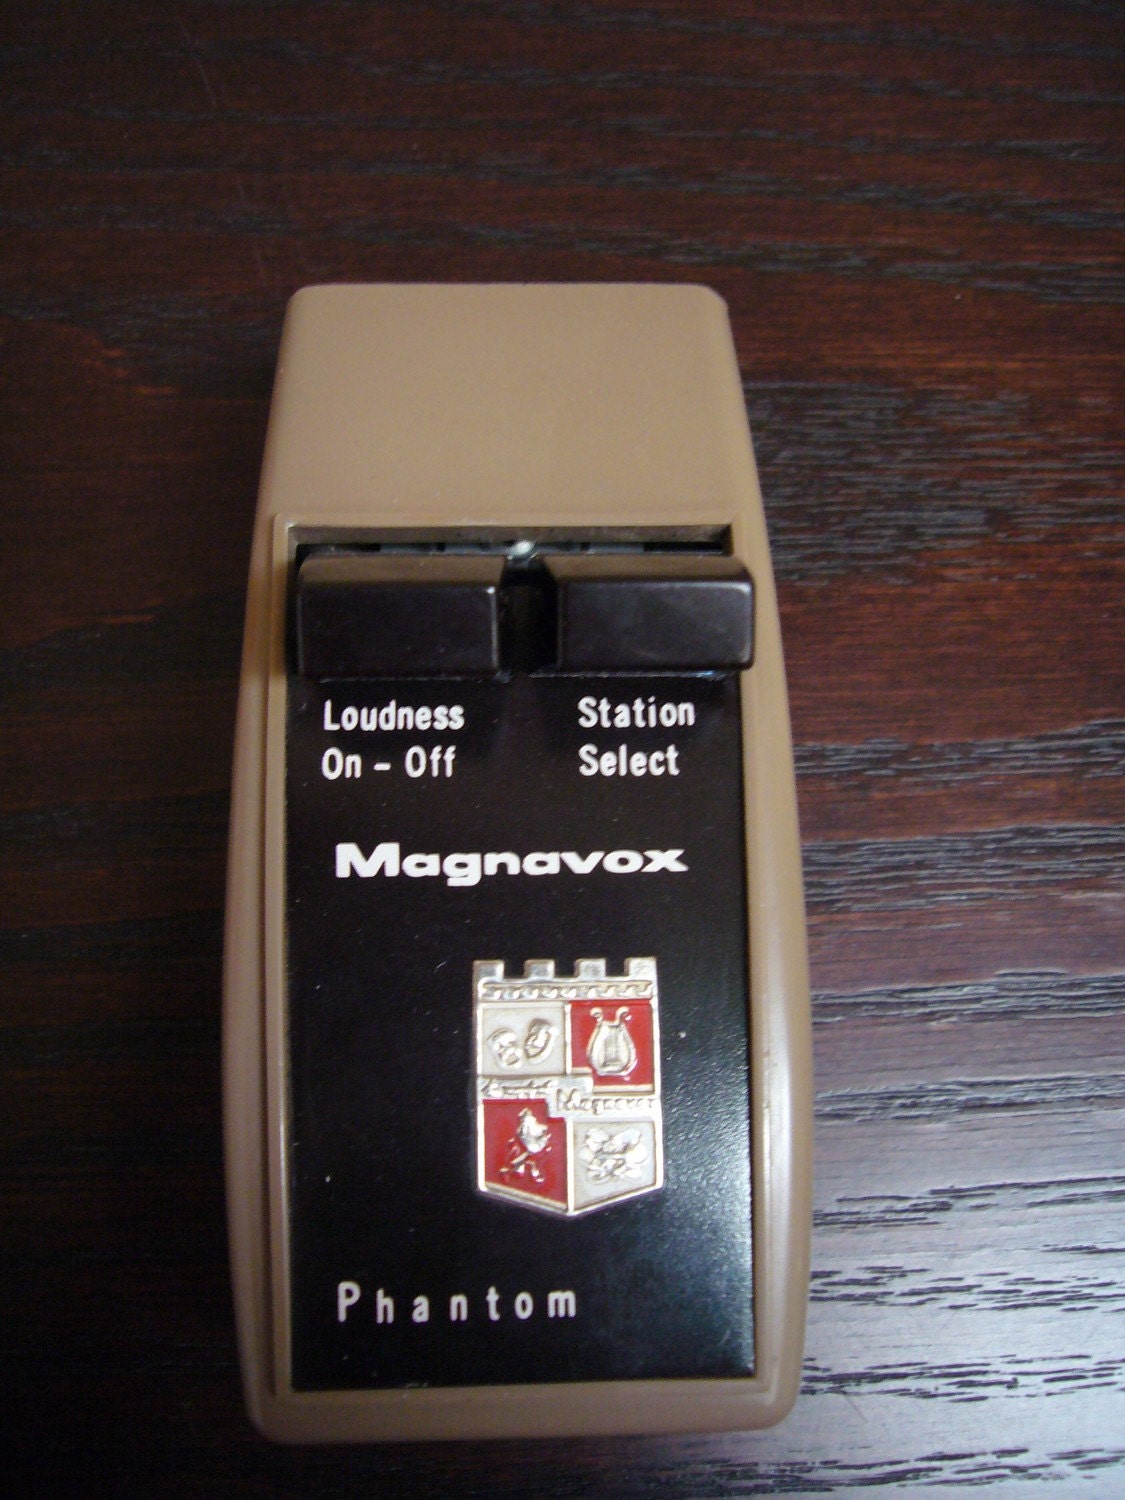 intelliadmin remote control serial number